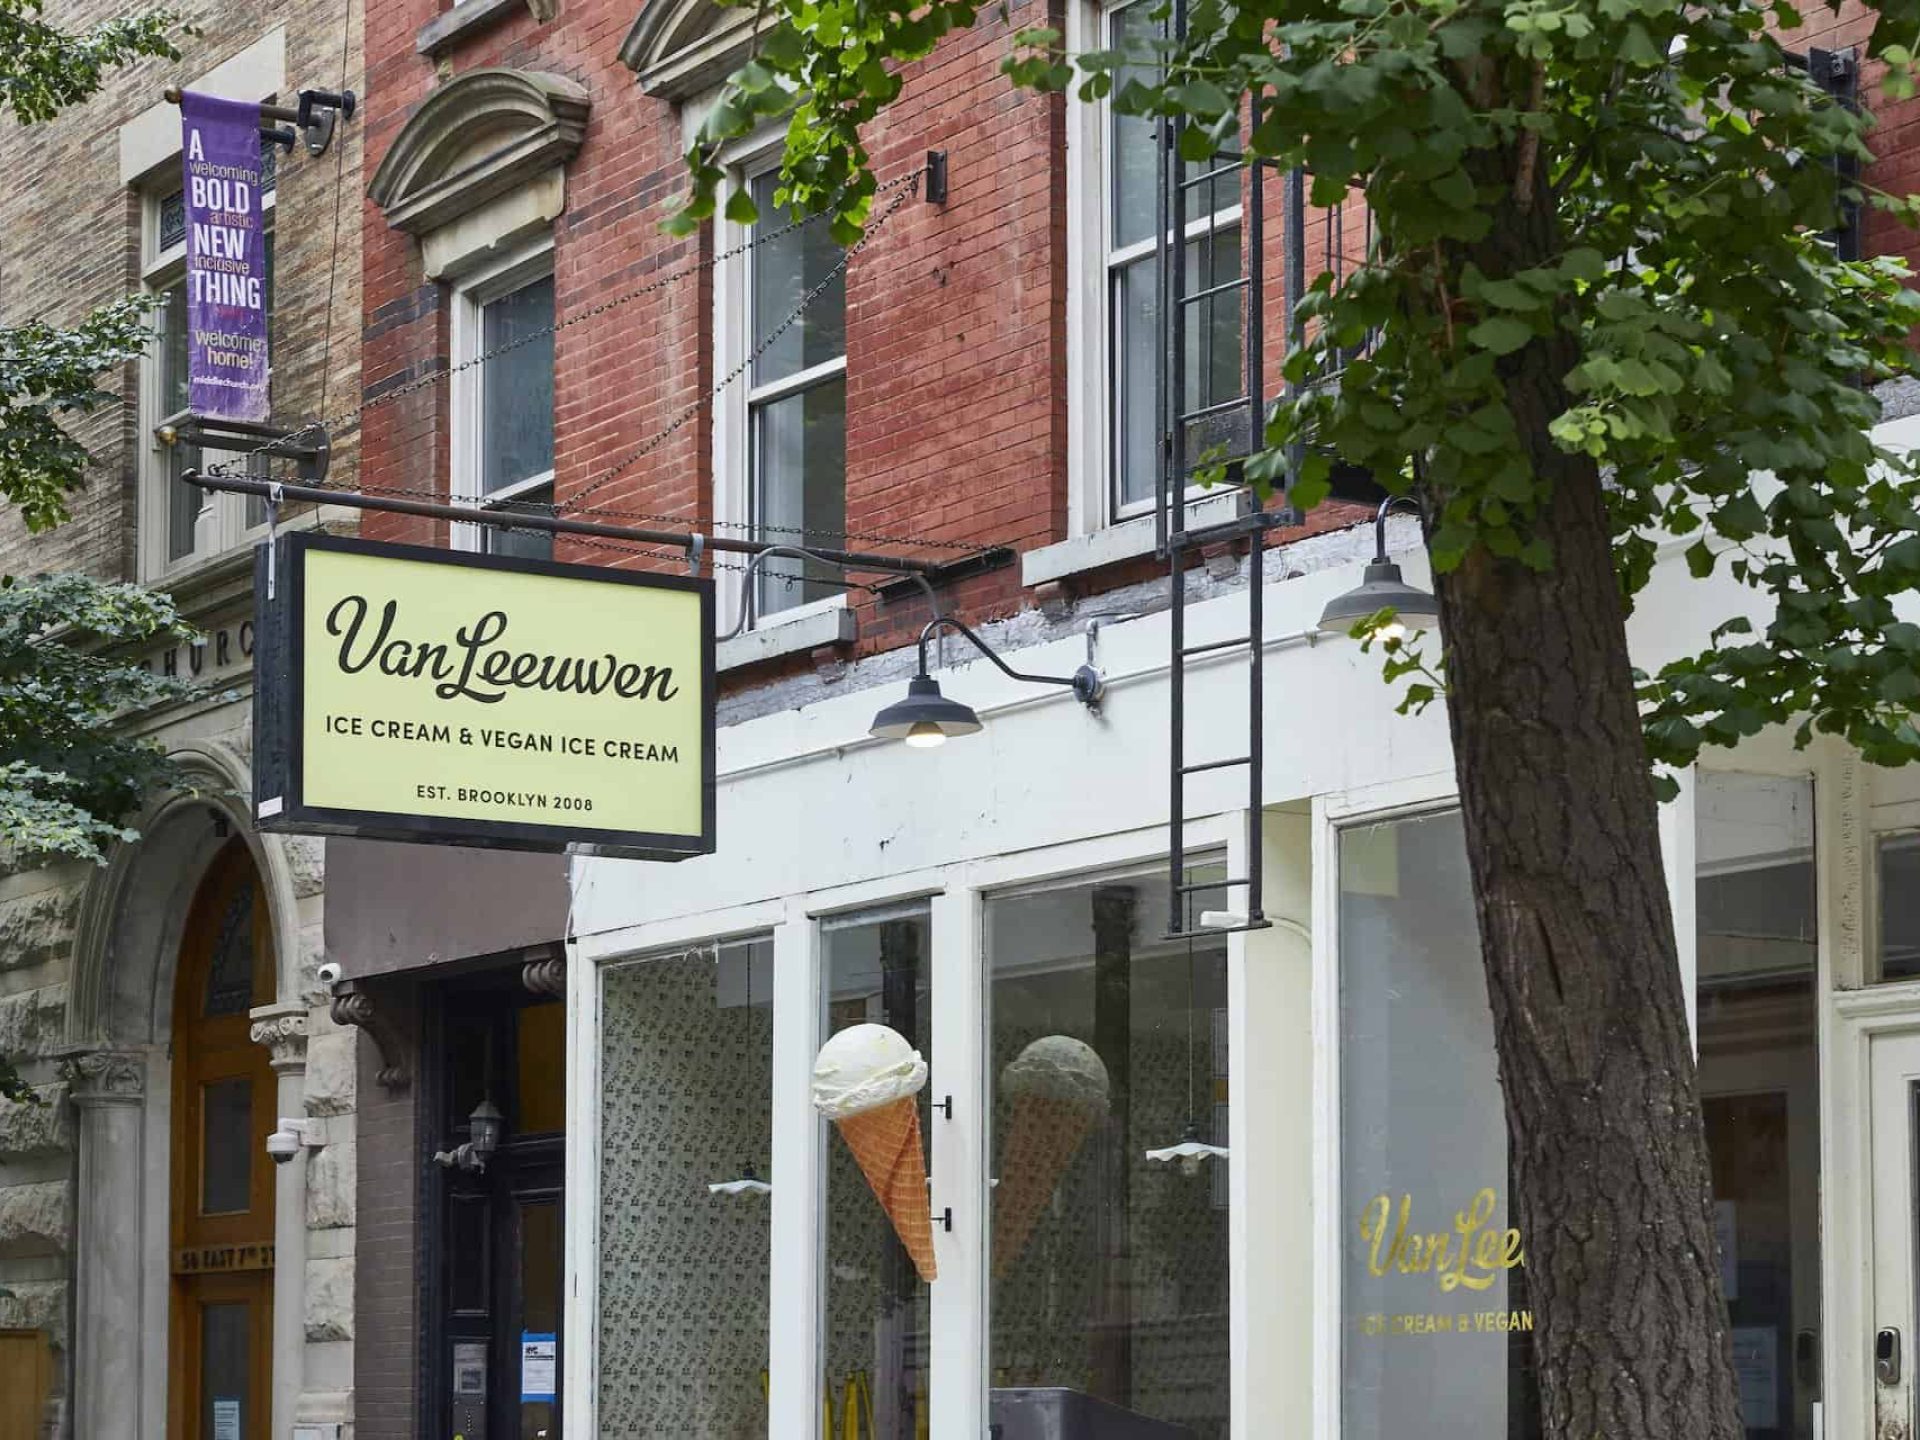 Street view of Van Leeuwen Ice Cream & Vegan Ice Cream shop in Brooklyn. Elevated store sign above large windows with decals.